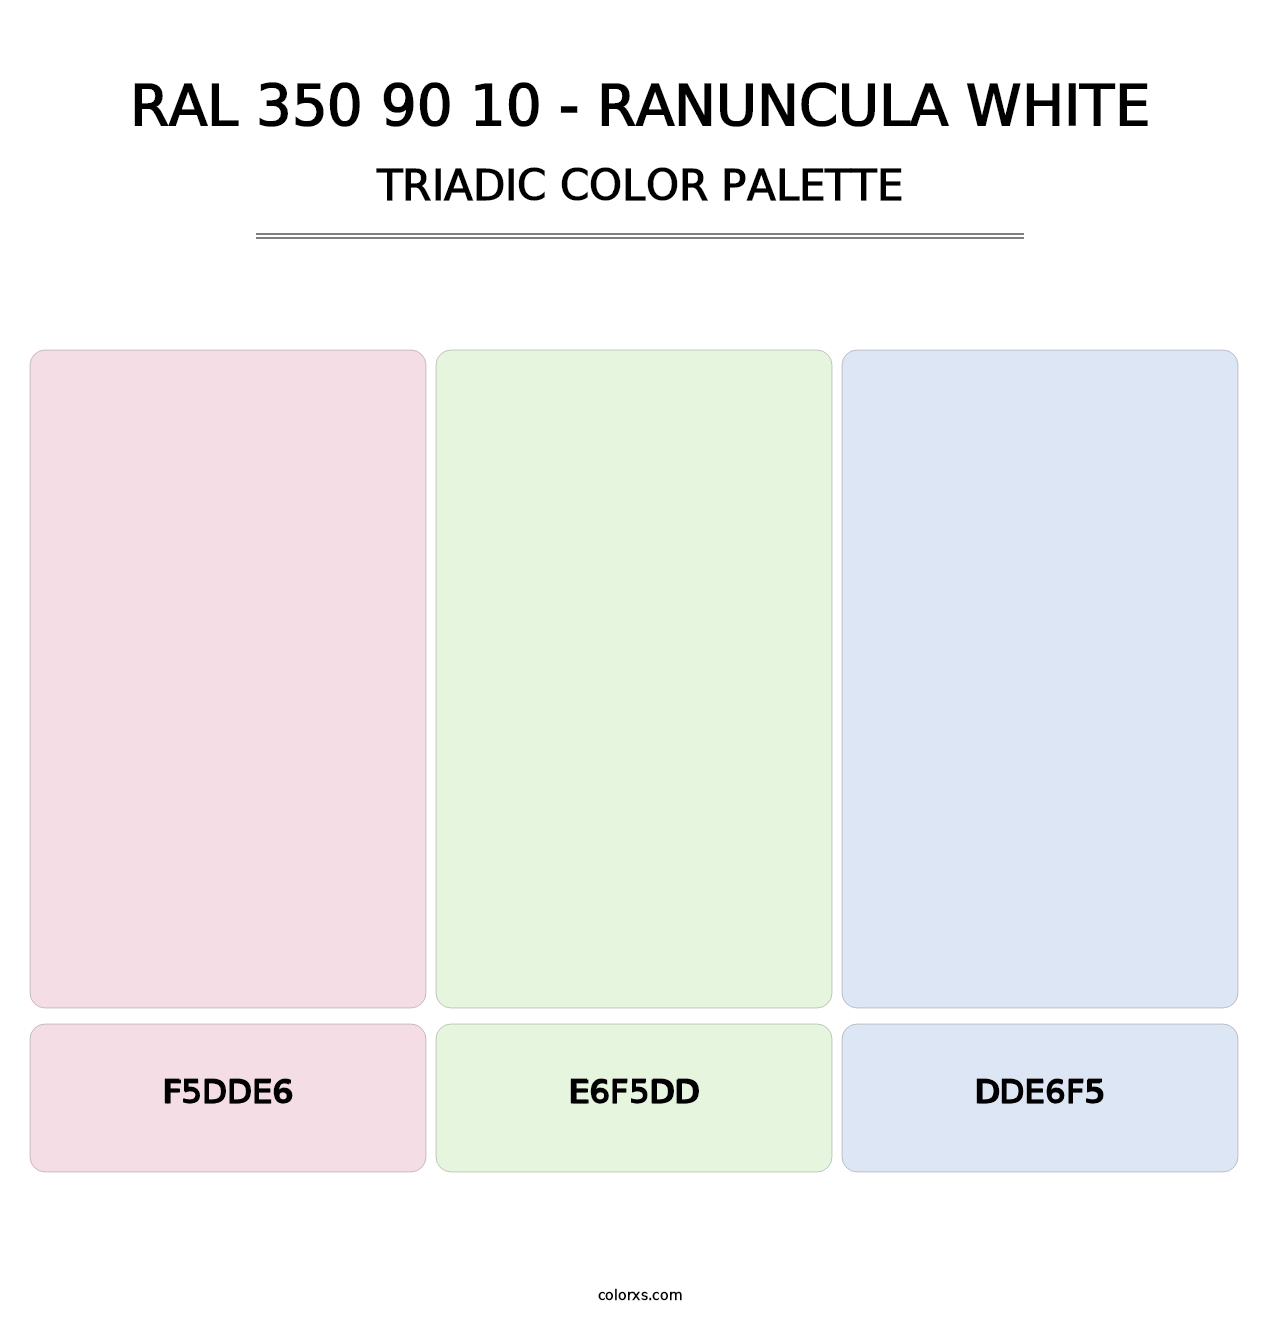 RAL 350 90 10 - Ranuncula White - Triadic Color Palette